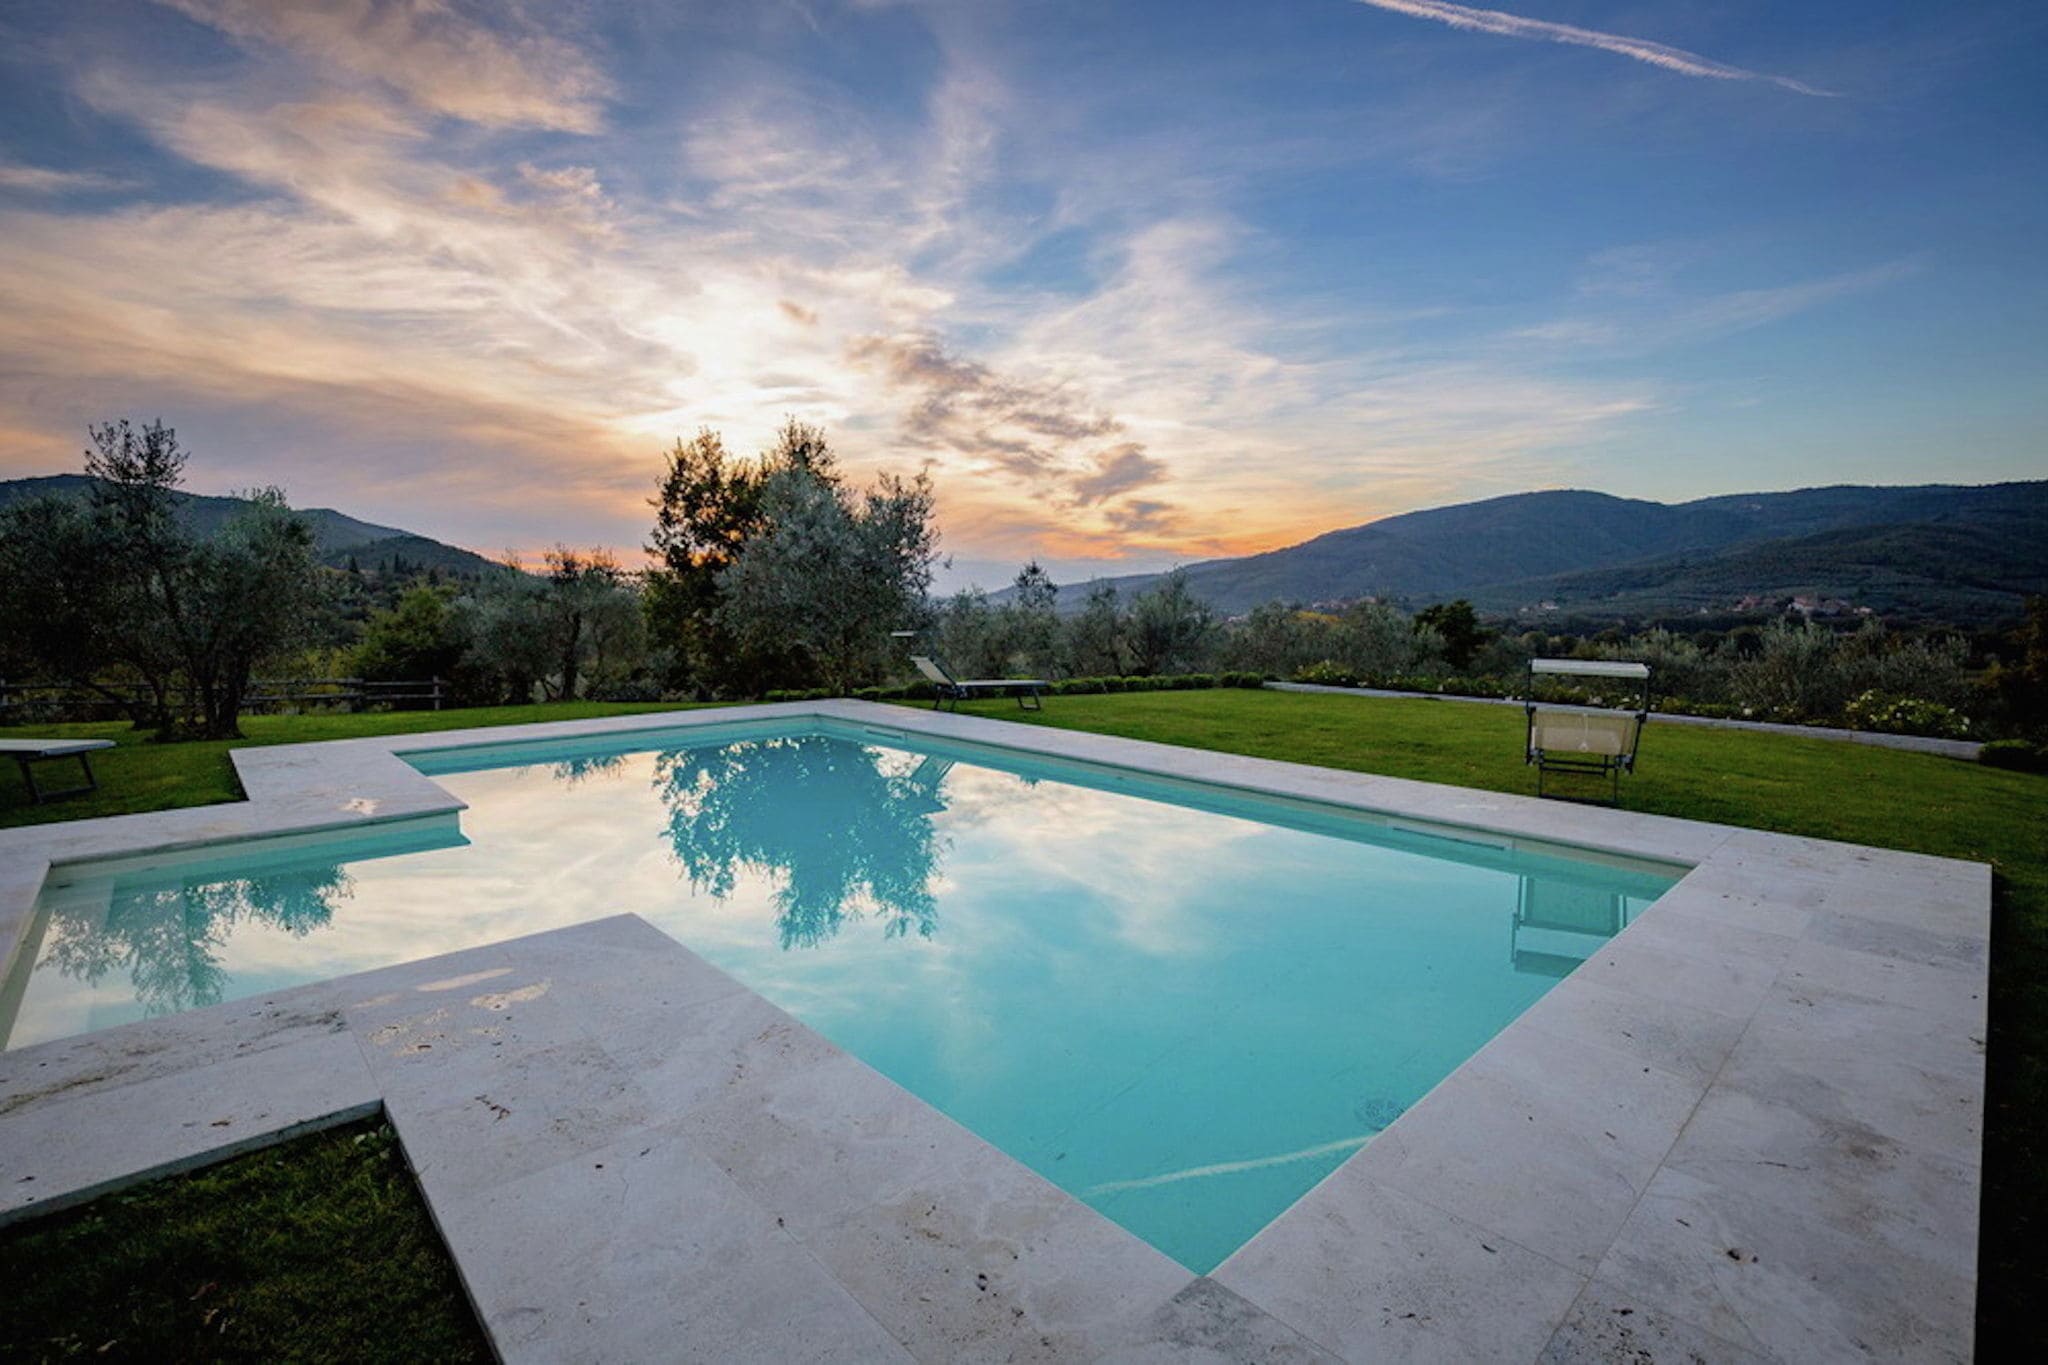 Maison de vacances à Castiglion Fiorentino avec piscine